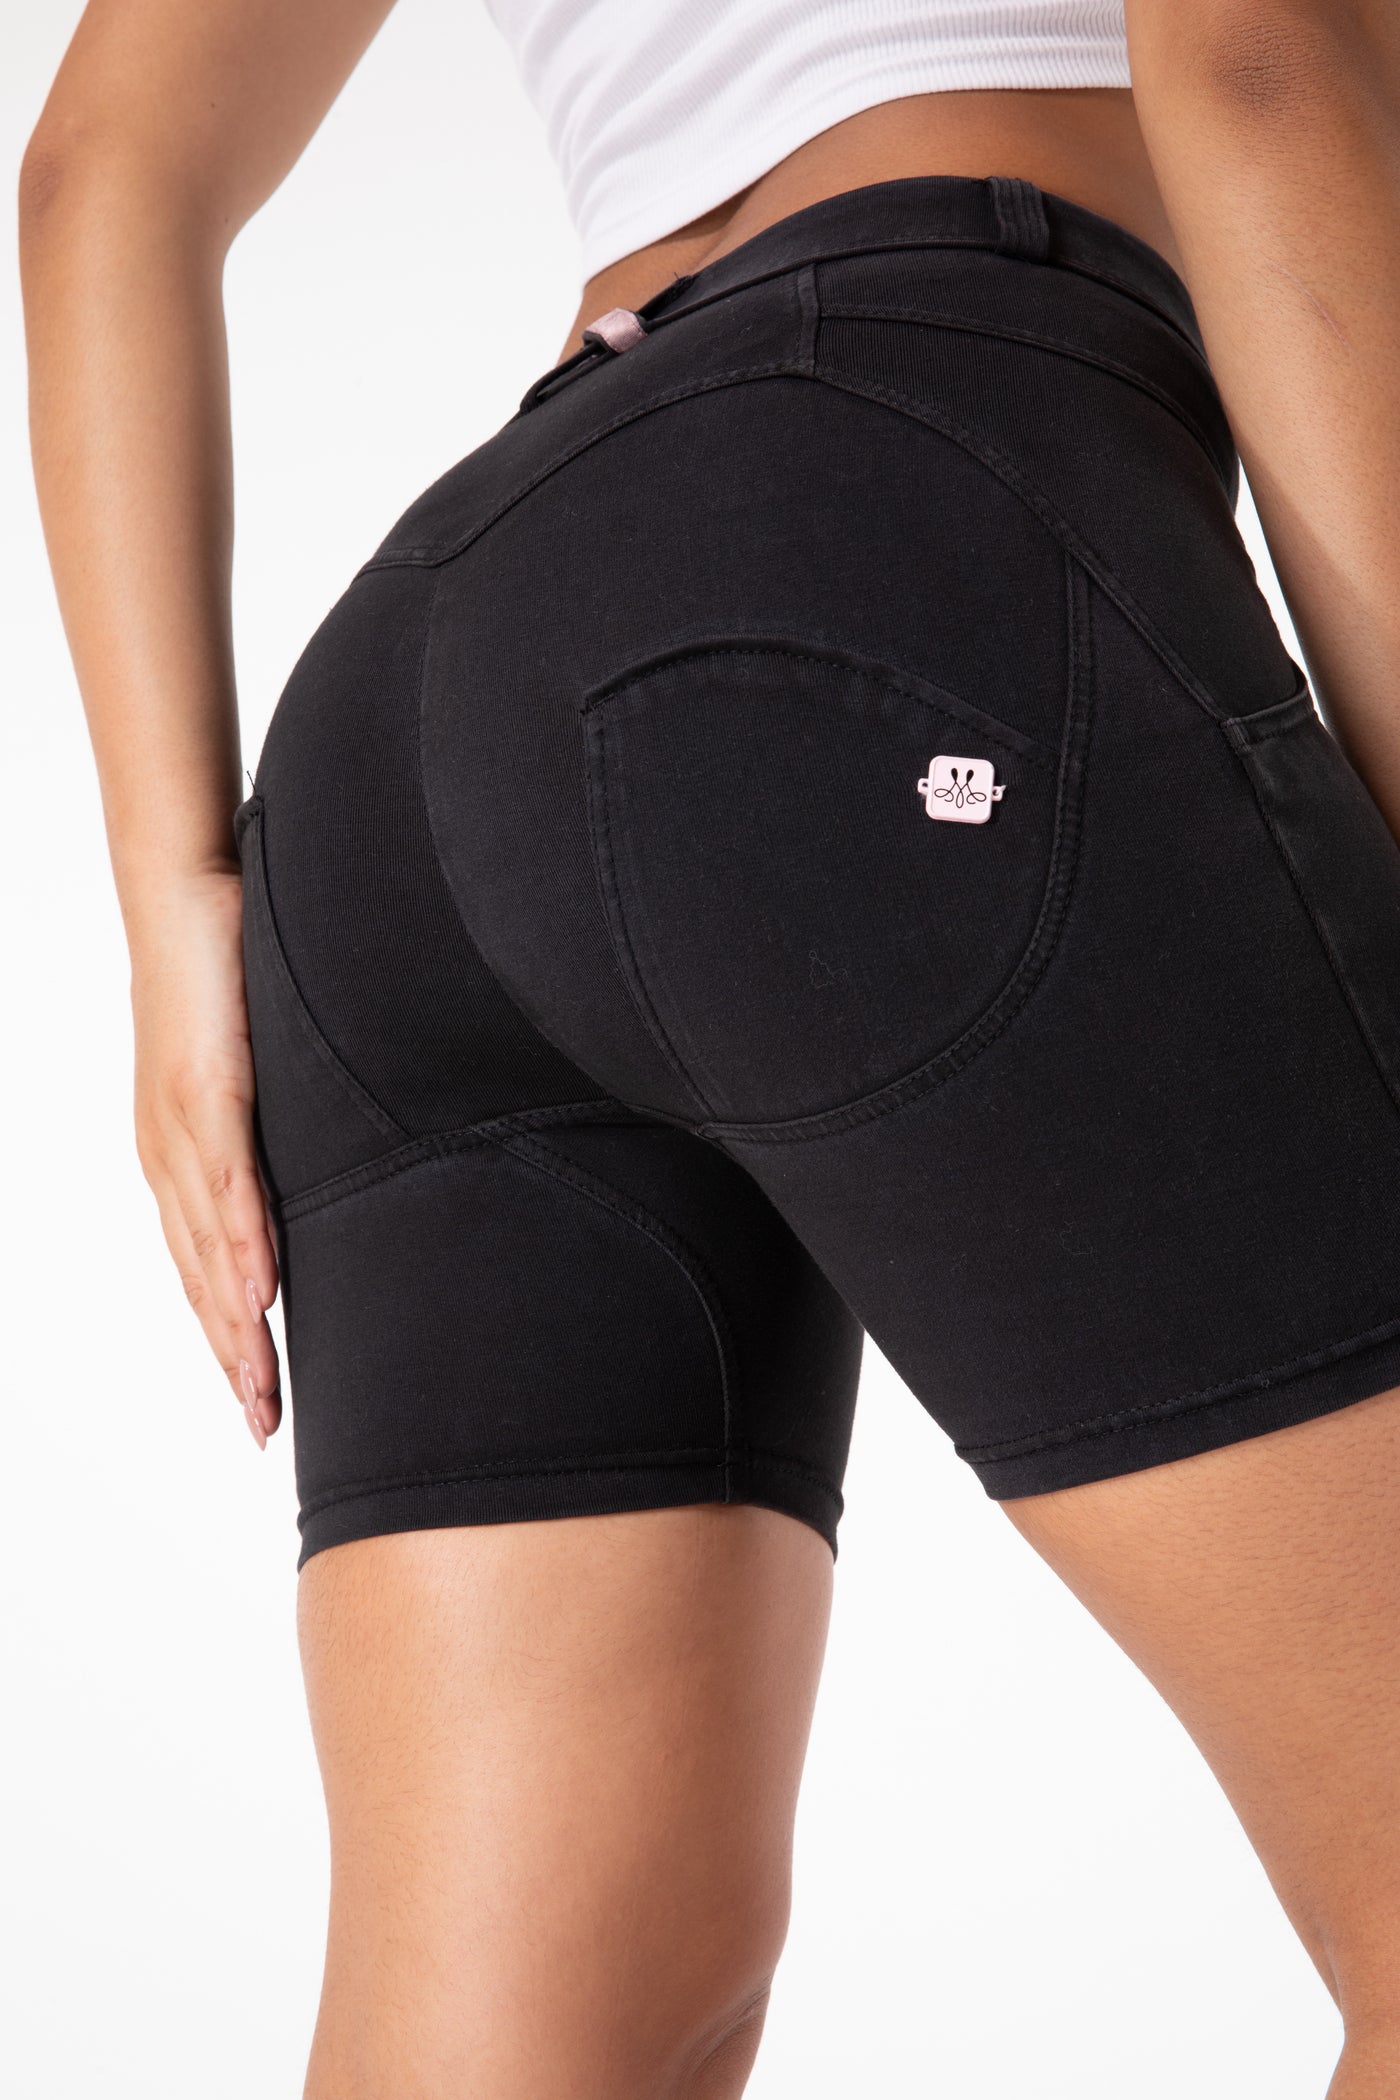 Shascullfites Melody black stretch jeans women elastic waist jeans denim shorts for women